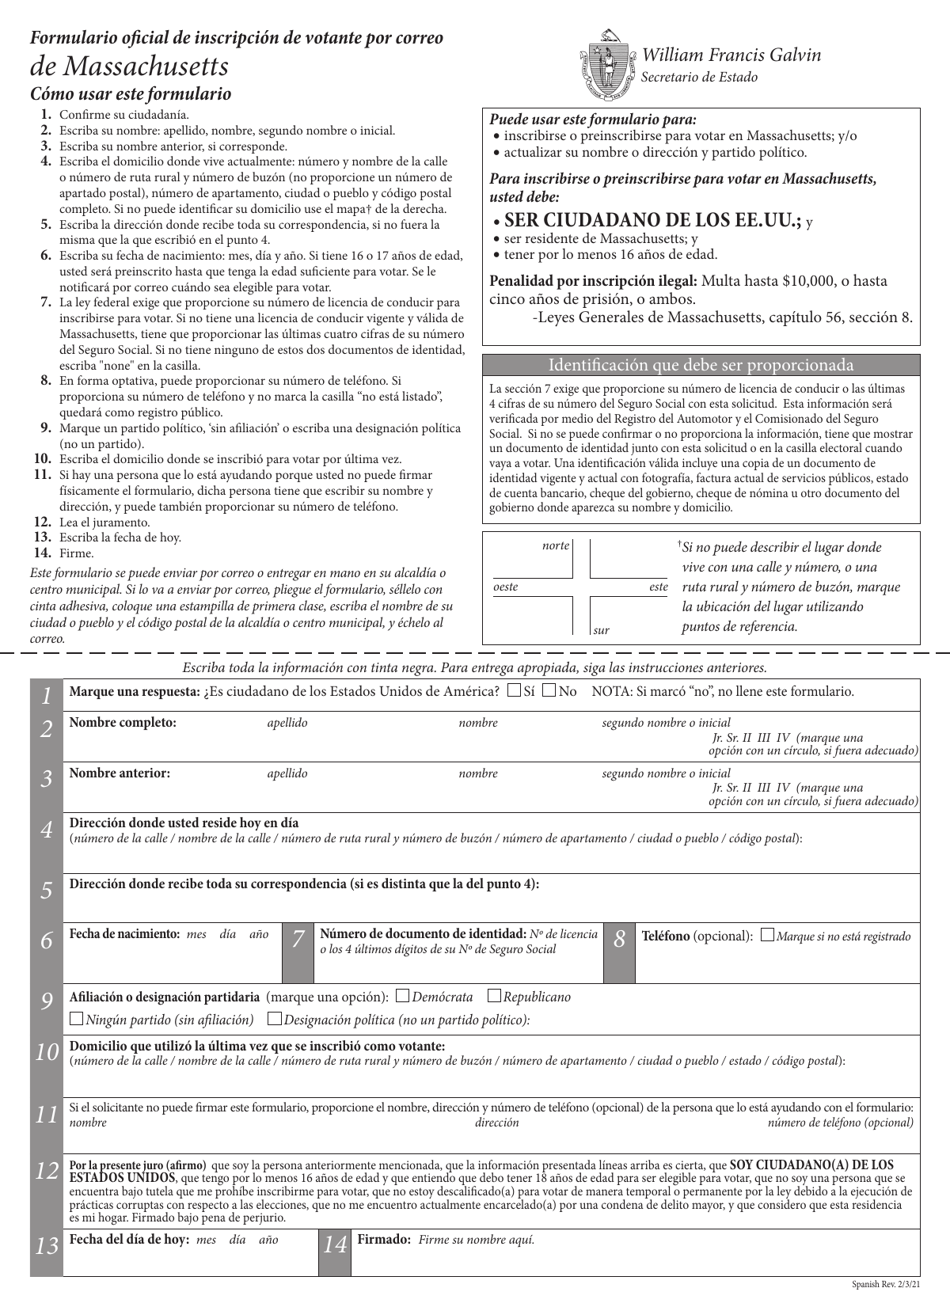 Formulario Oficial De Inscripcion De Votante Por Correo De Massachusetts - Massachusetts (Spanish), Page 1